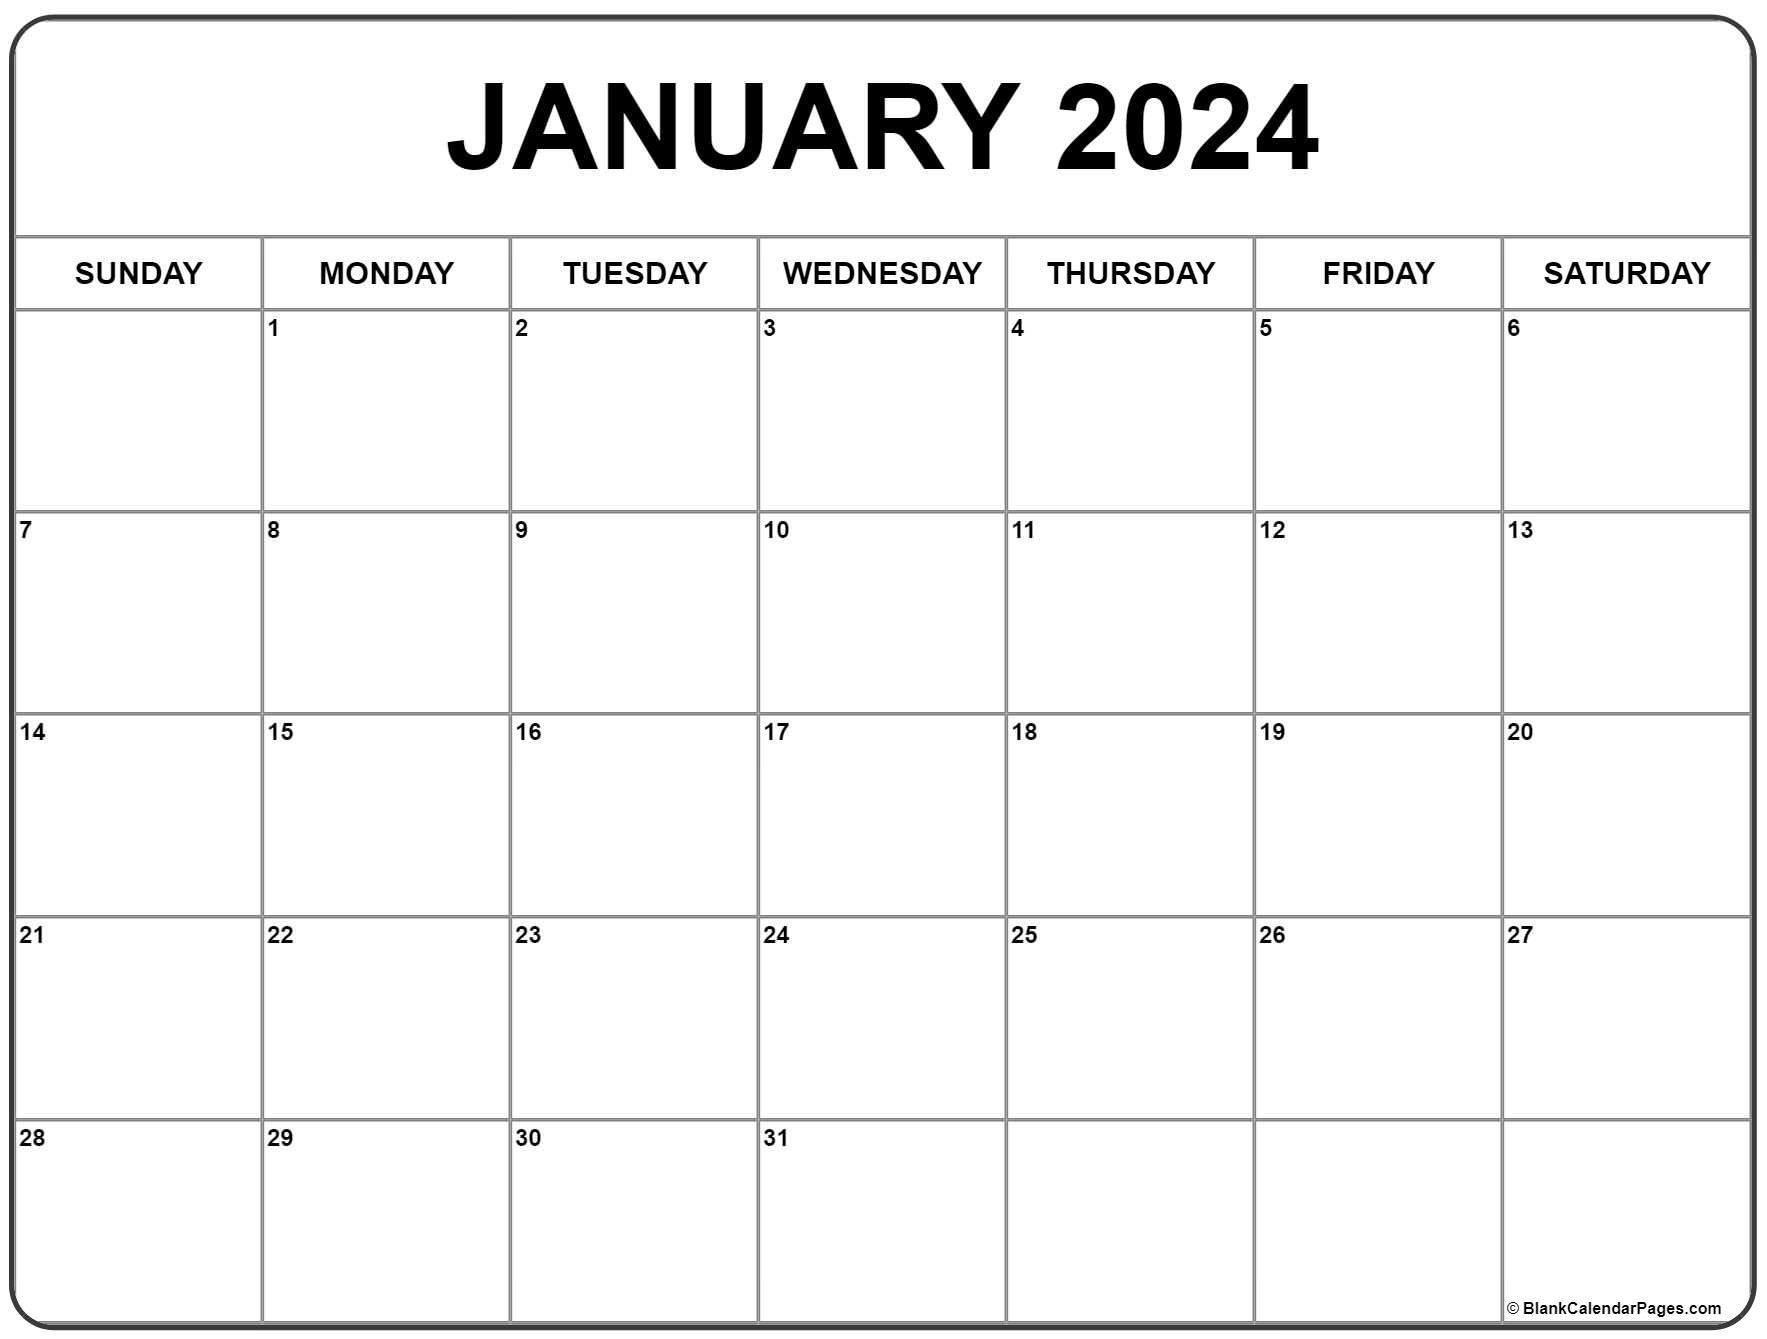 January 2024 Calendar | Free Printable Calendar | Printable Monthly Calendar 2024